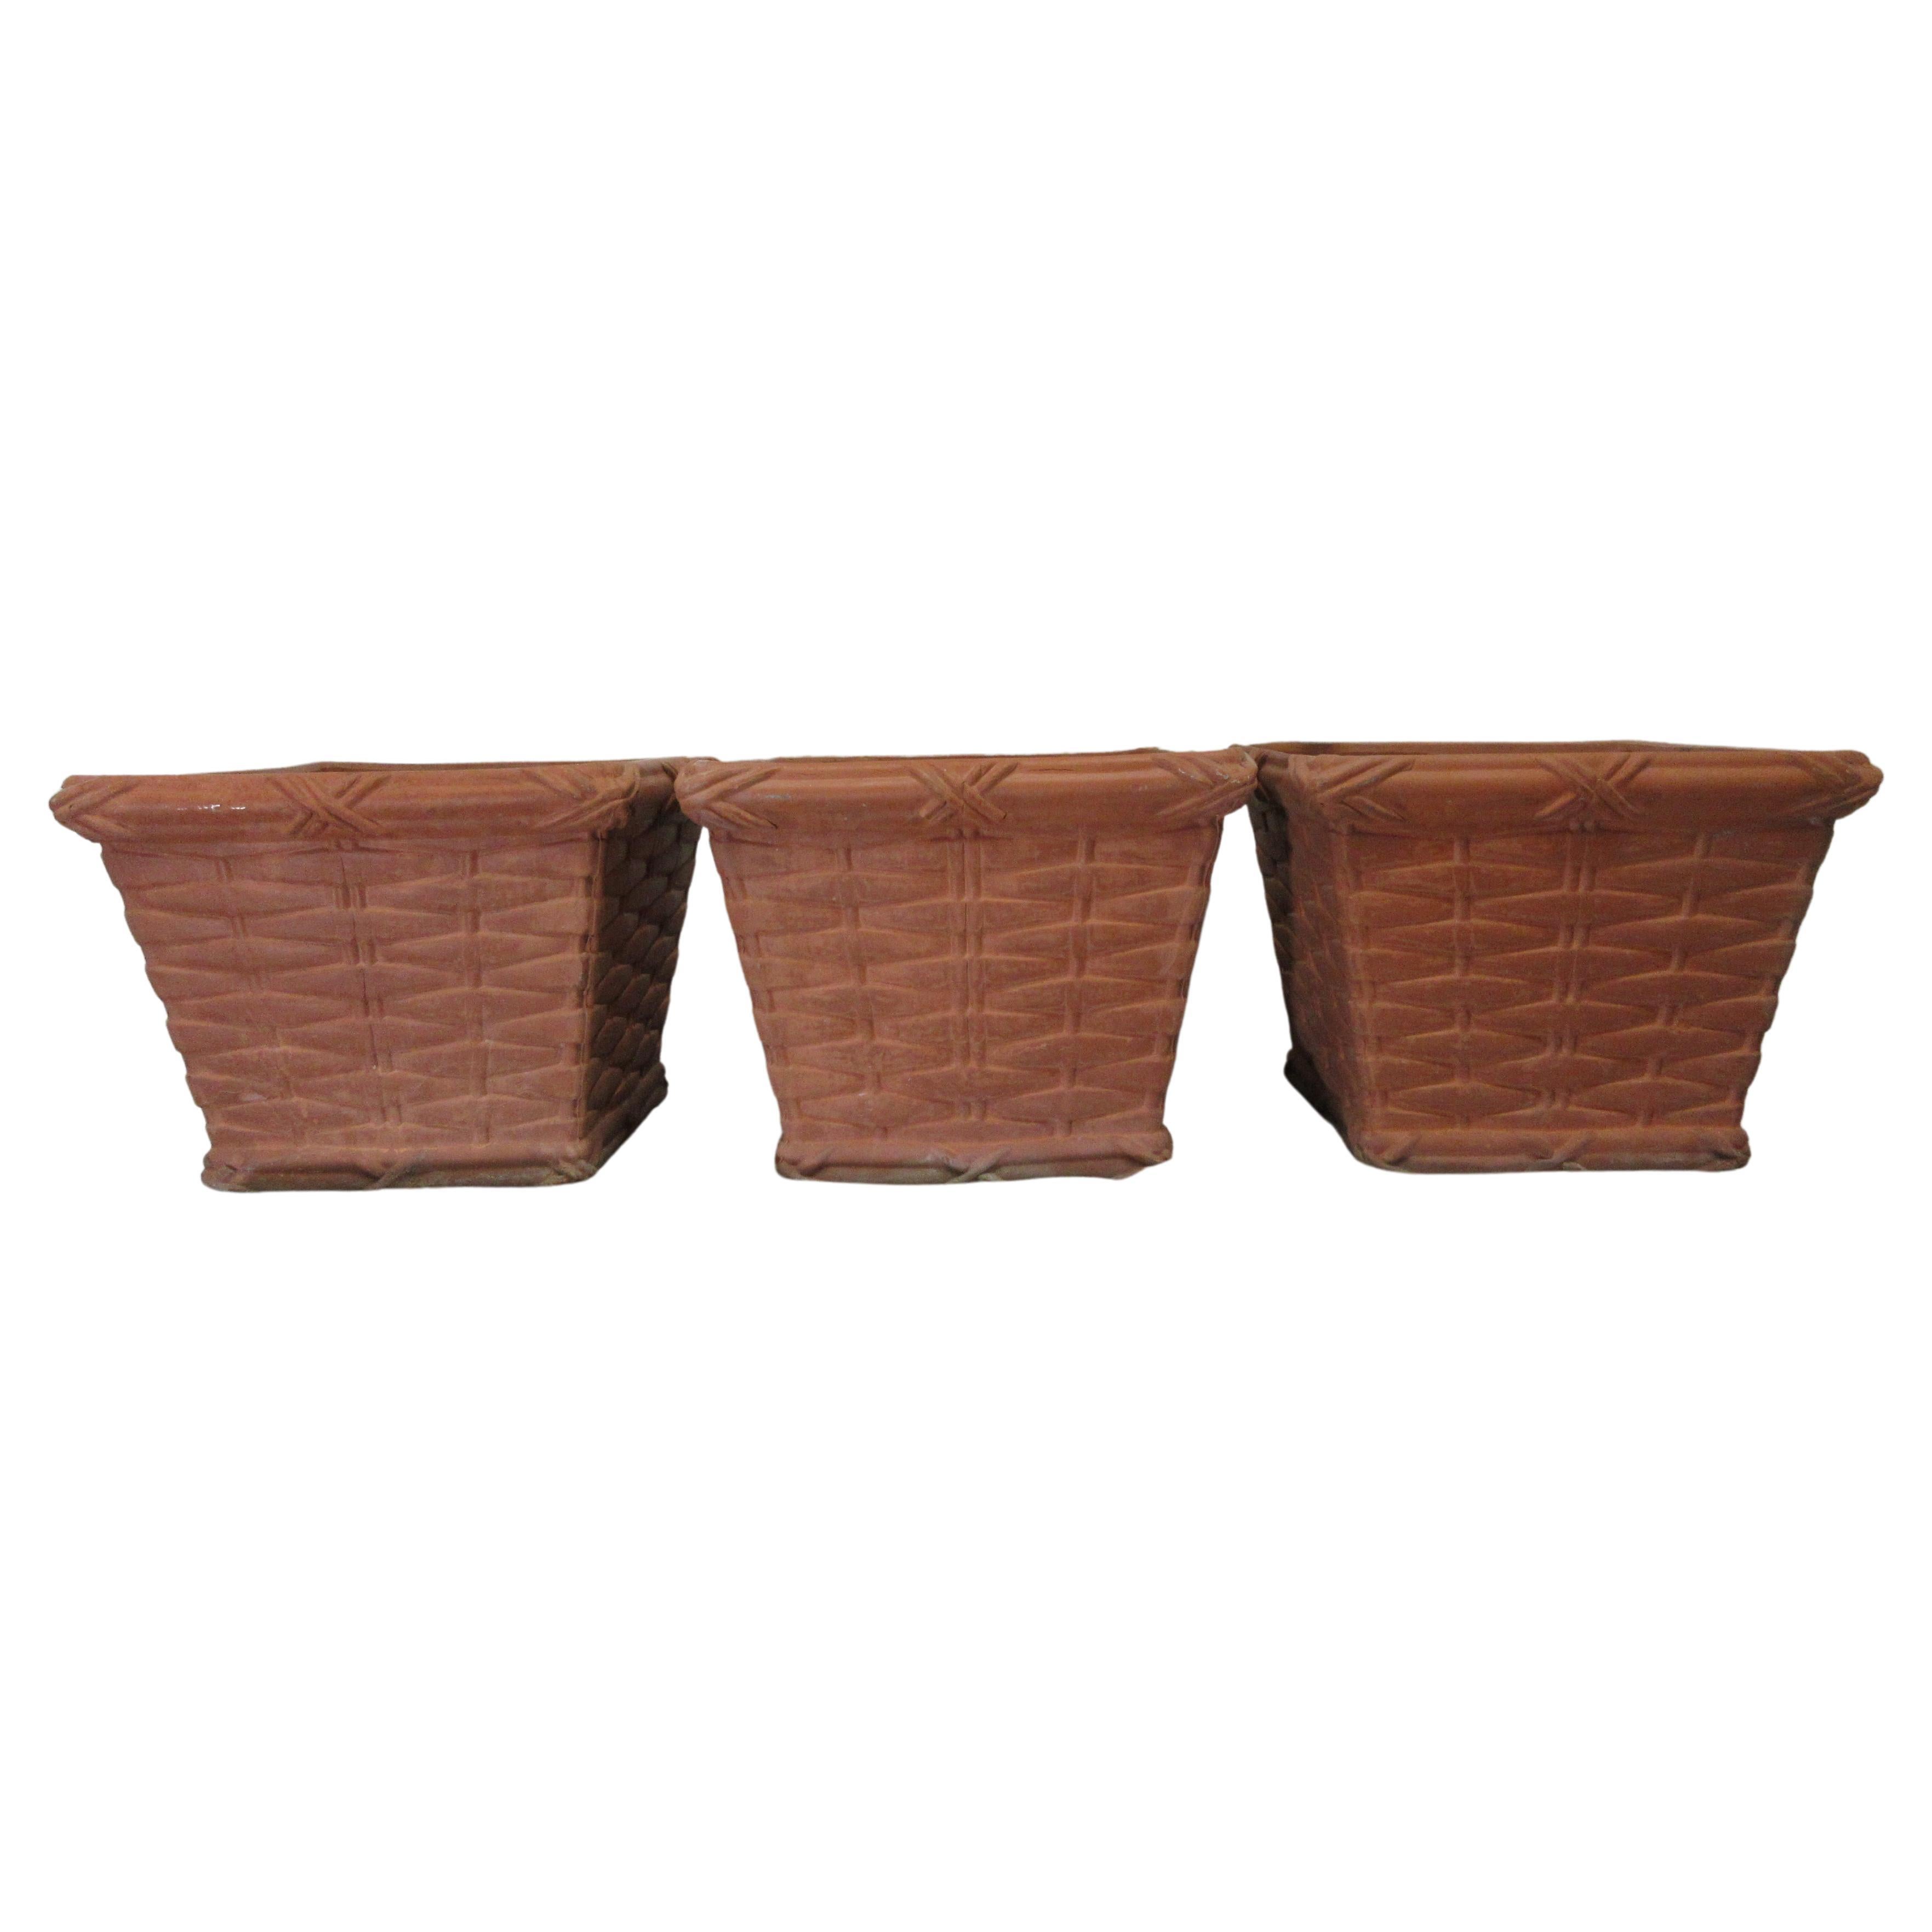 3 Basket Weave Planters For Sale